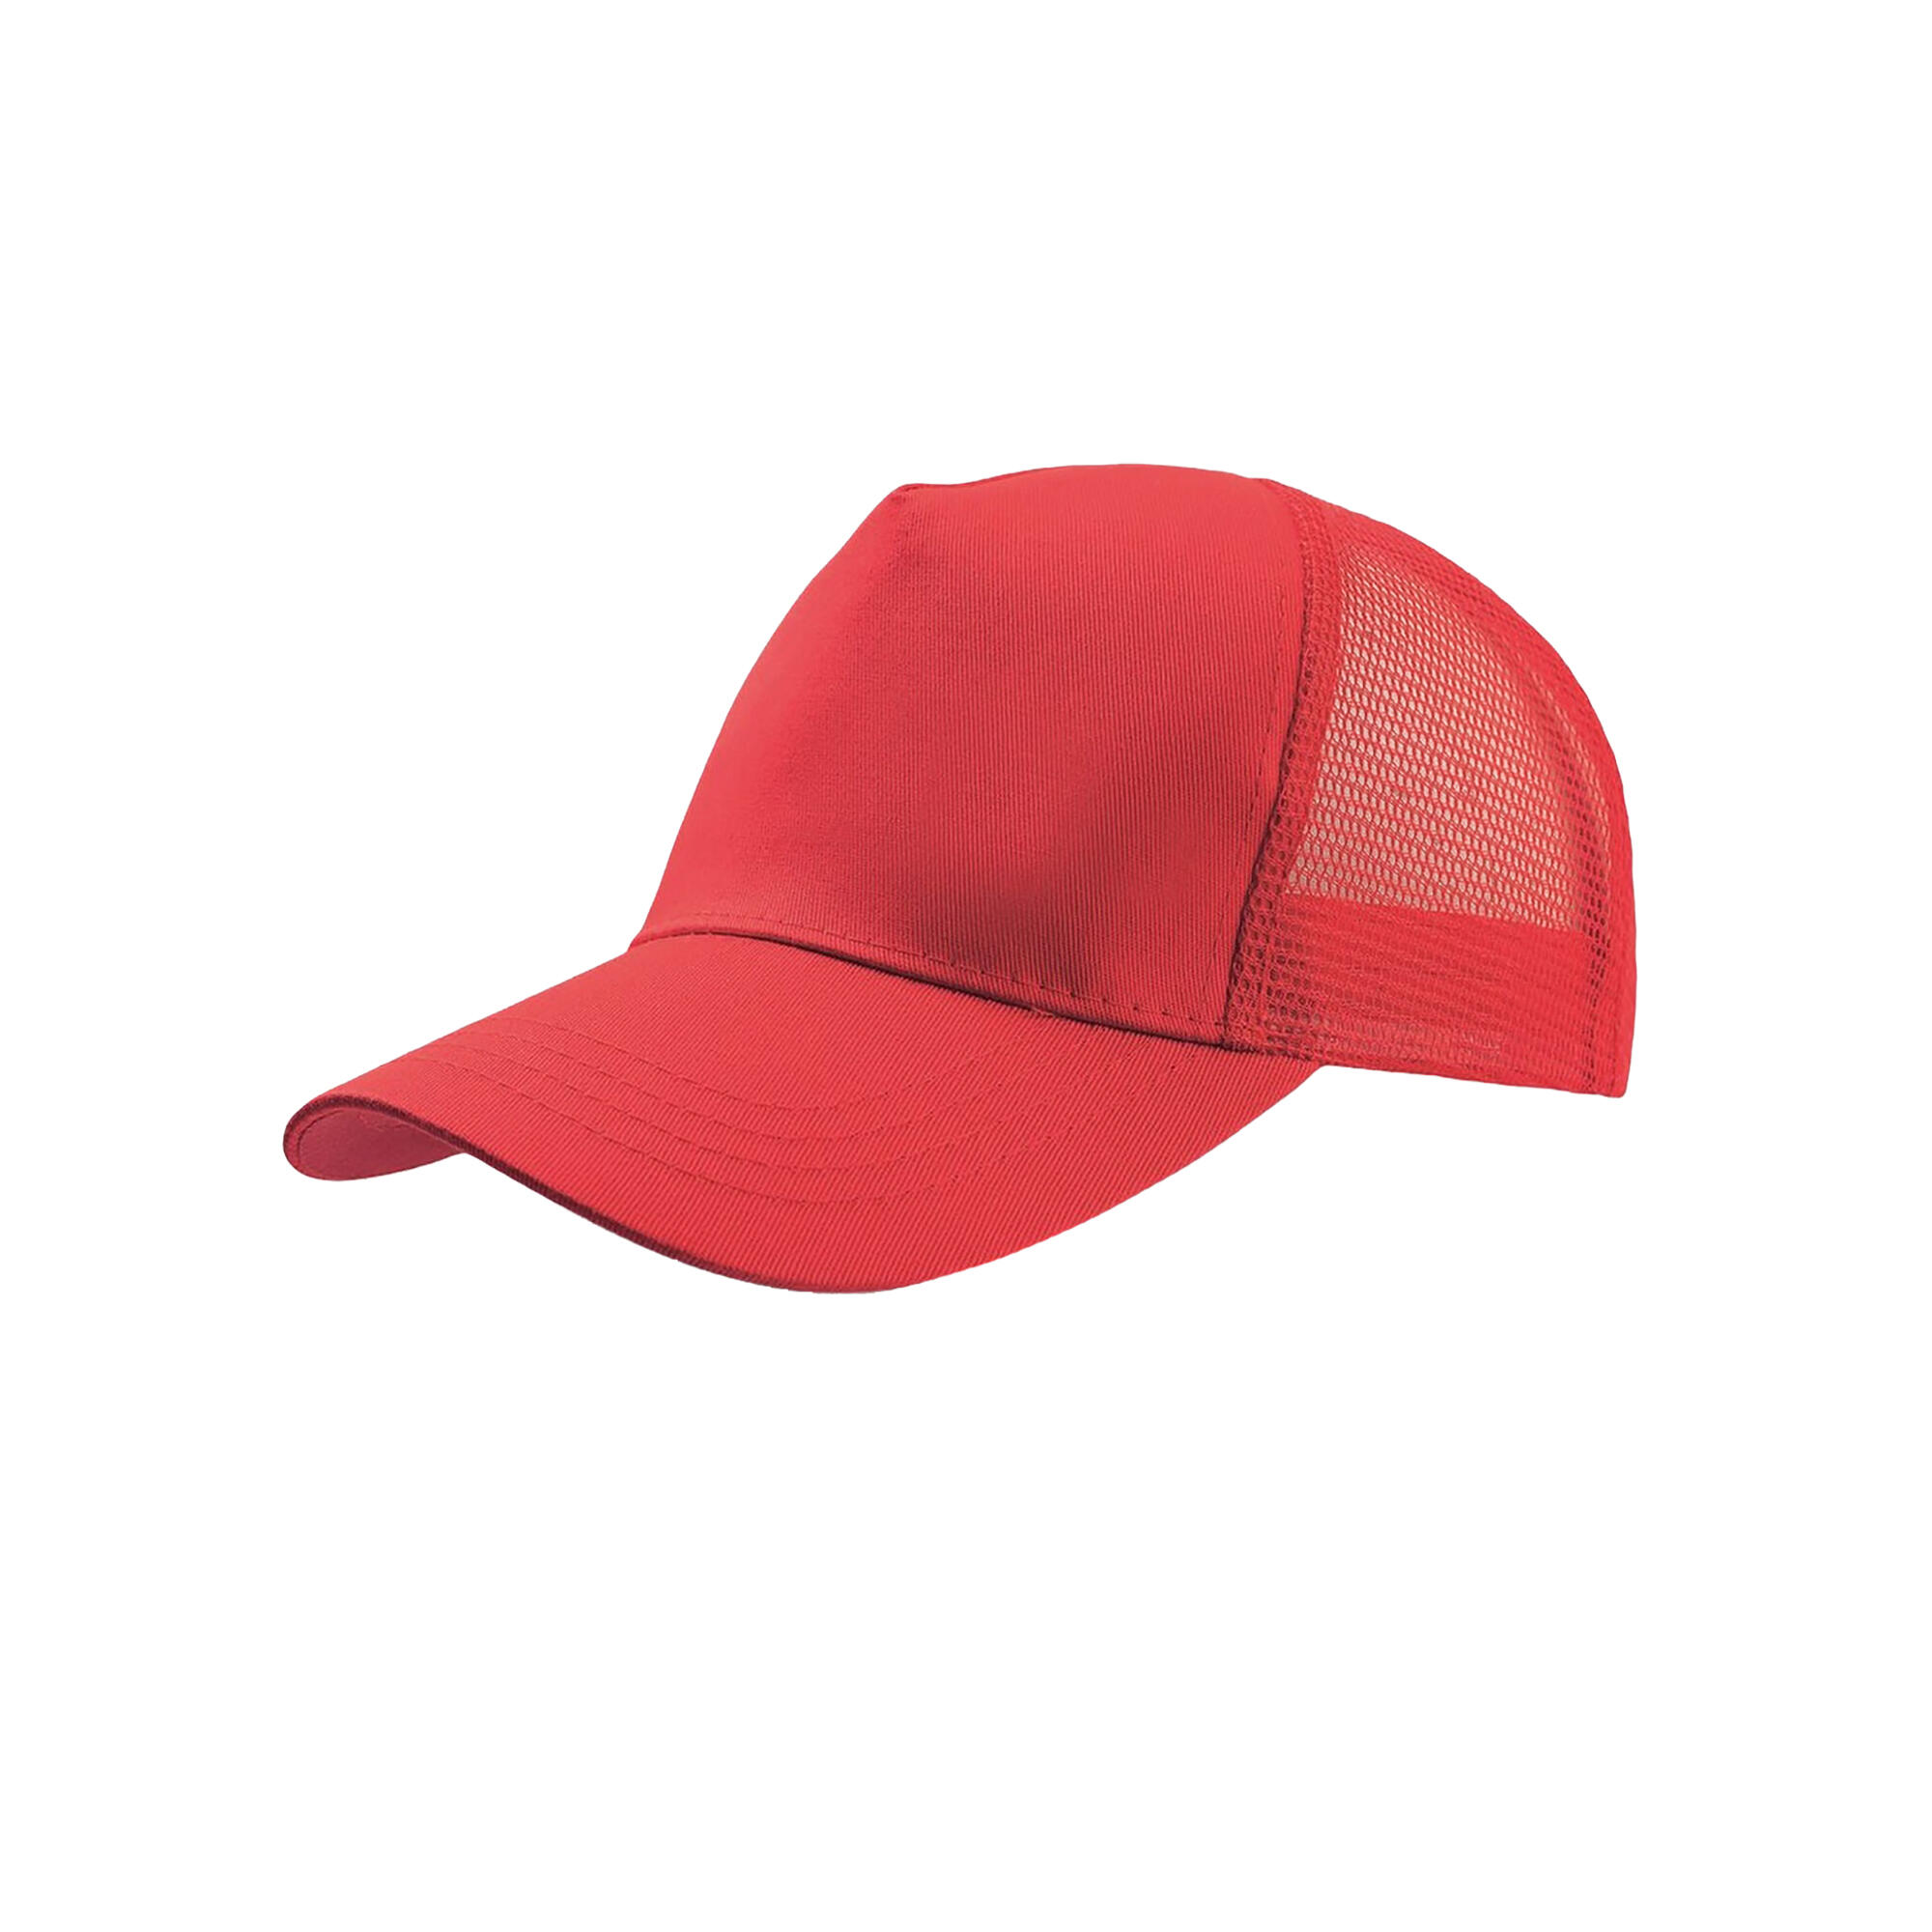 ATLANTIS Rapper Cotton 5 Panel Trucker Cap (Red/Red)